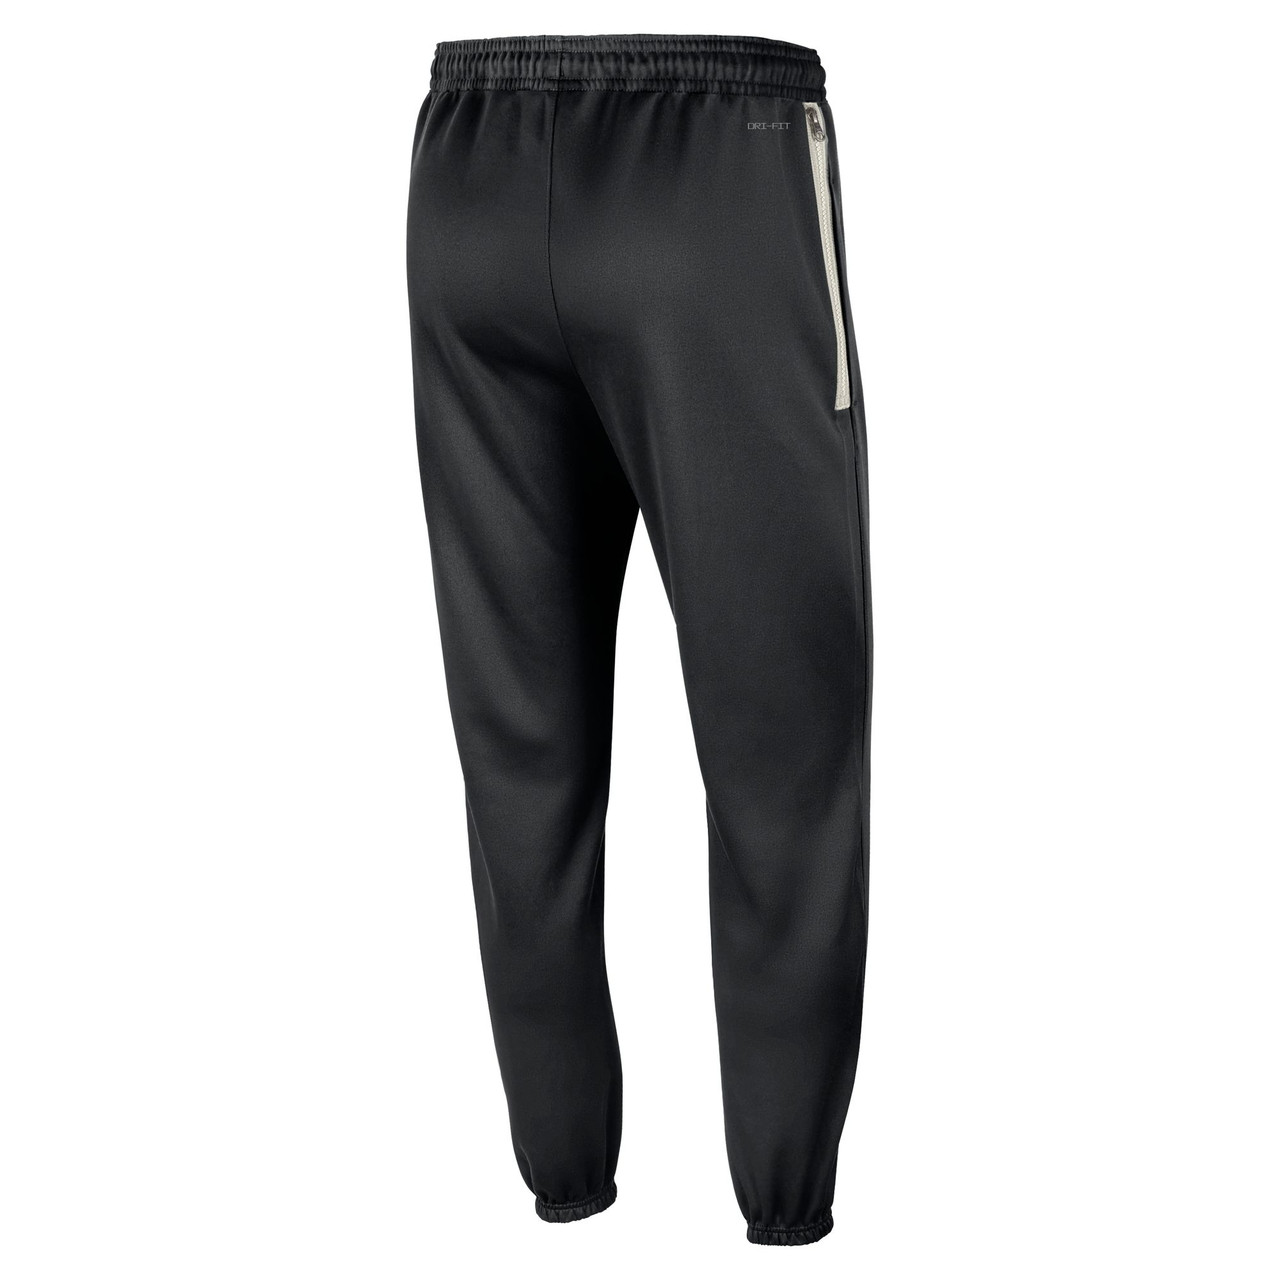 San Antonio Spurs Men's Nike ISS Print Fleece Pants - Black